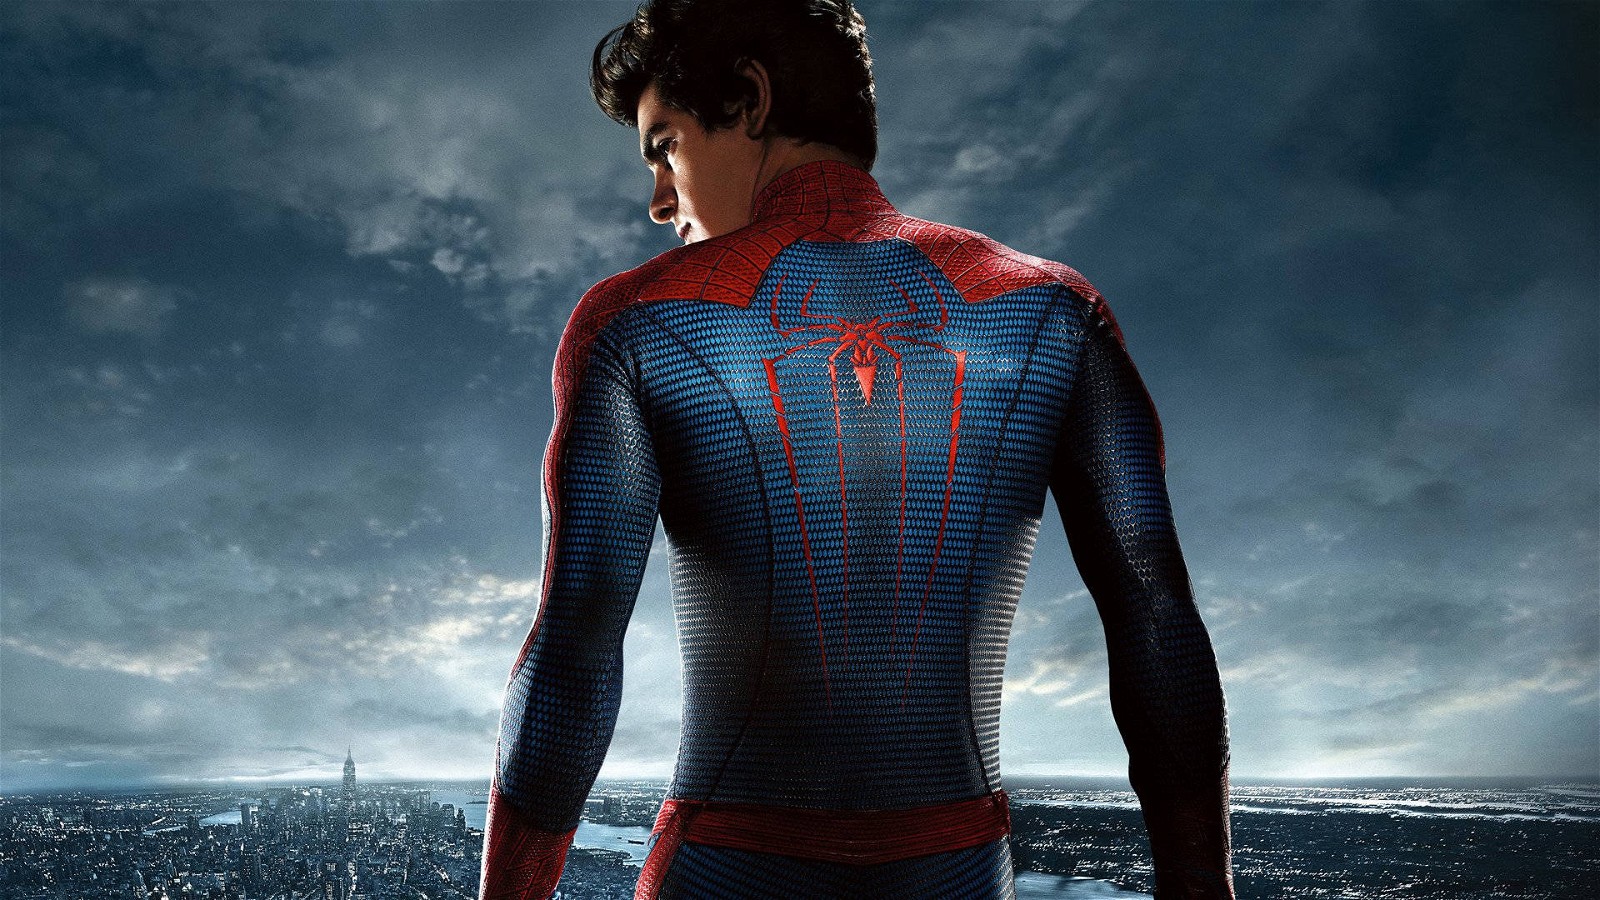 Andrew Garfield as Spider-Man.